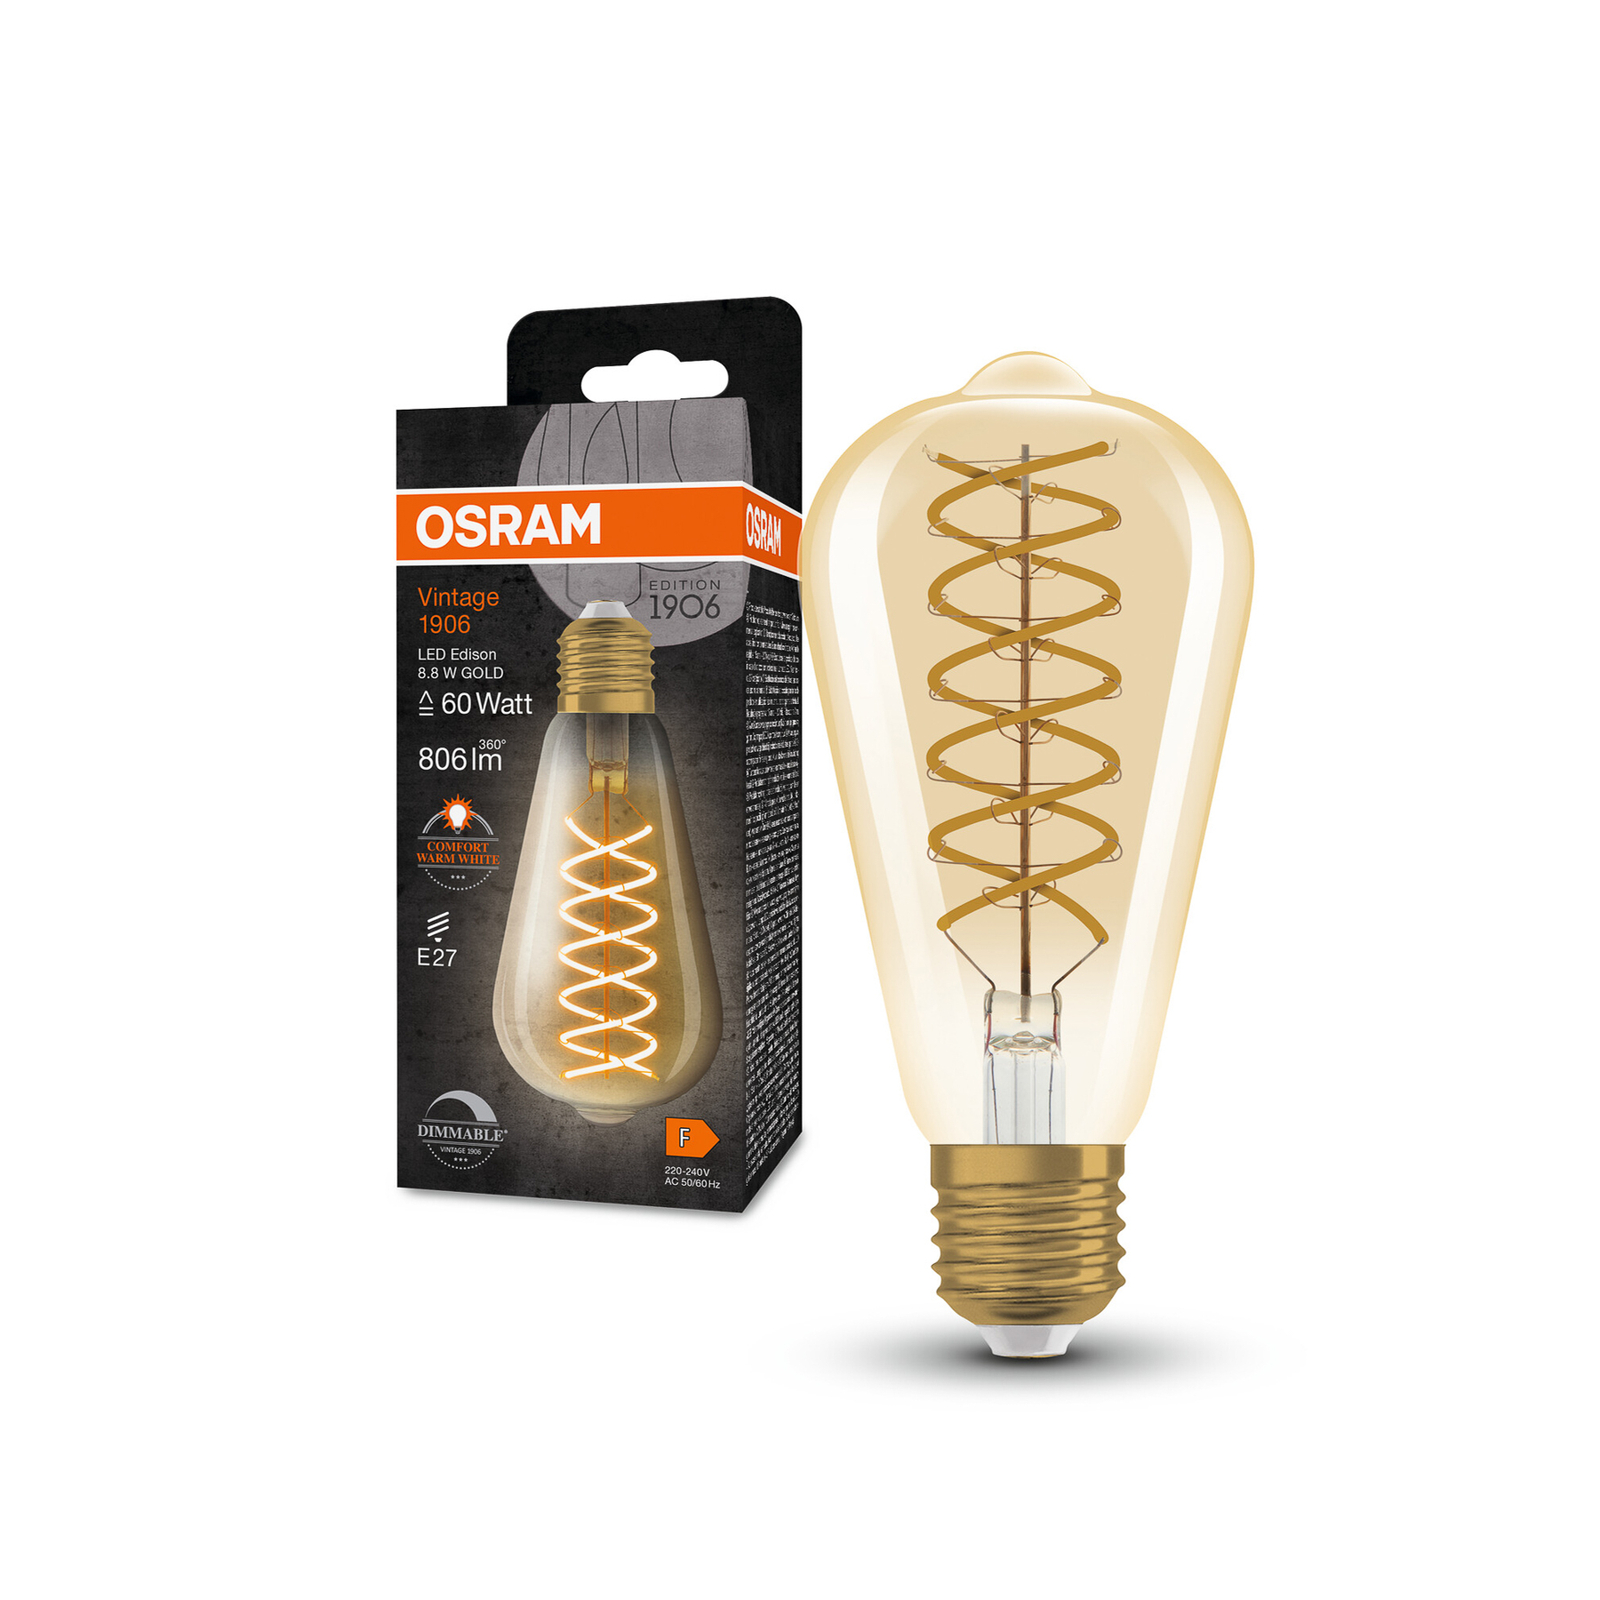 OSRAM LED Vintage 1906 Edison, zlatá, E27, 8,8 W, 824, stm.